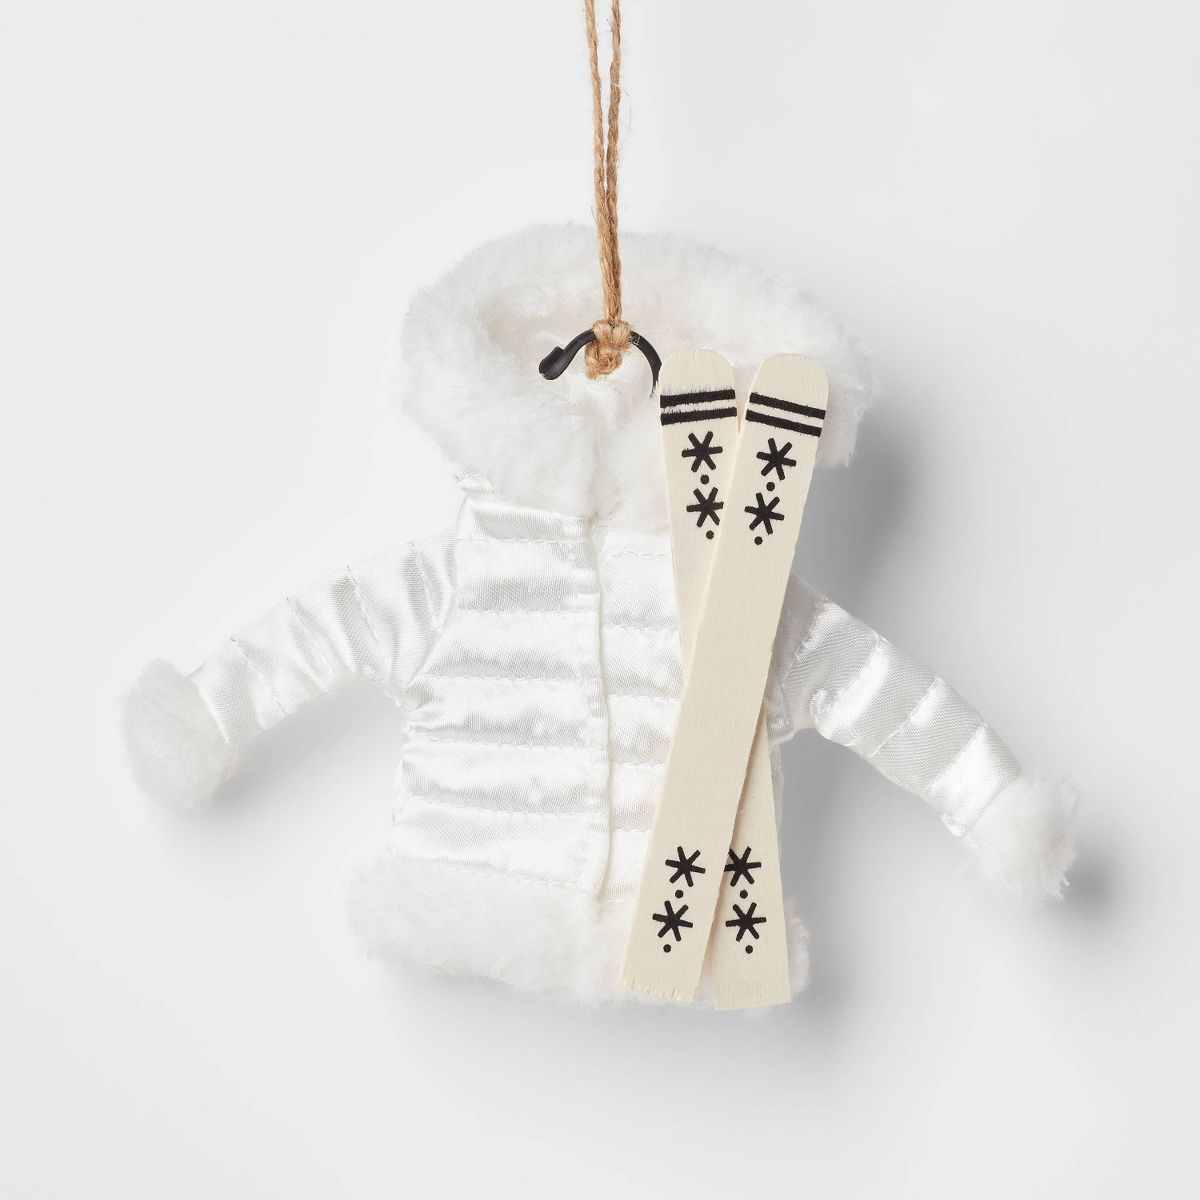 Fabric Ski Jacket with Skis Christmas Tree Ornament - Wondershop™ | Target